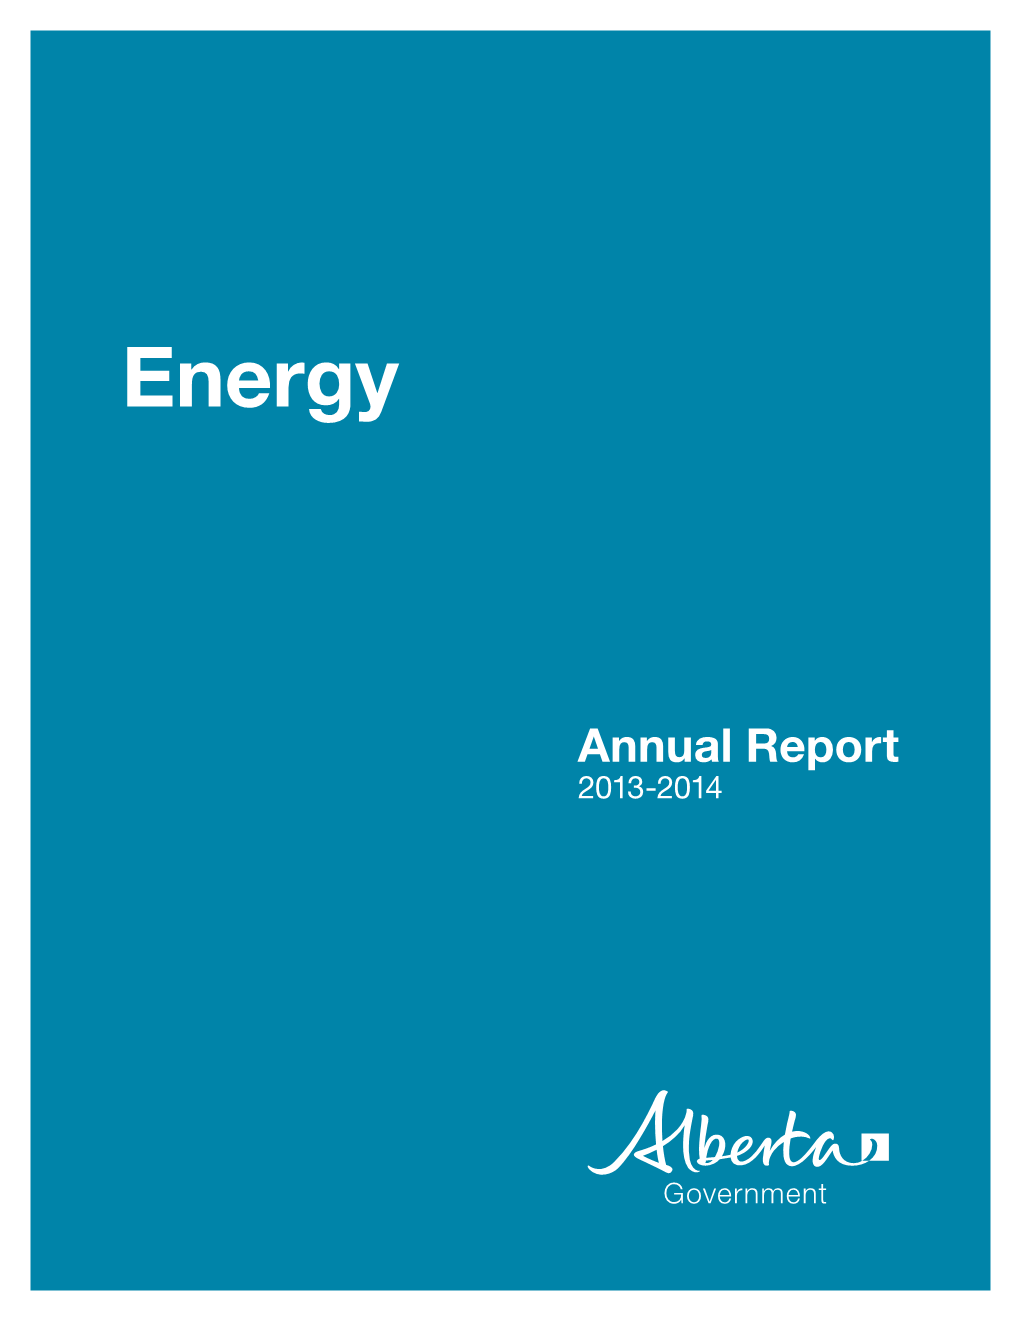 Alberta Energy Annual Report 2013